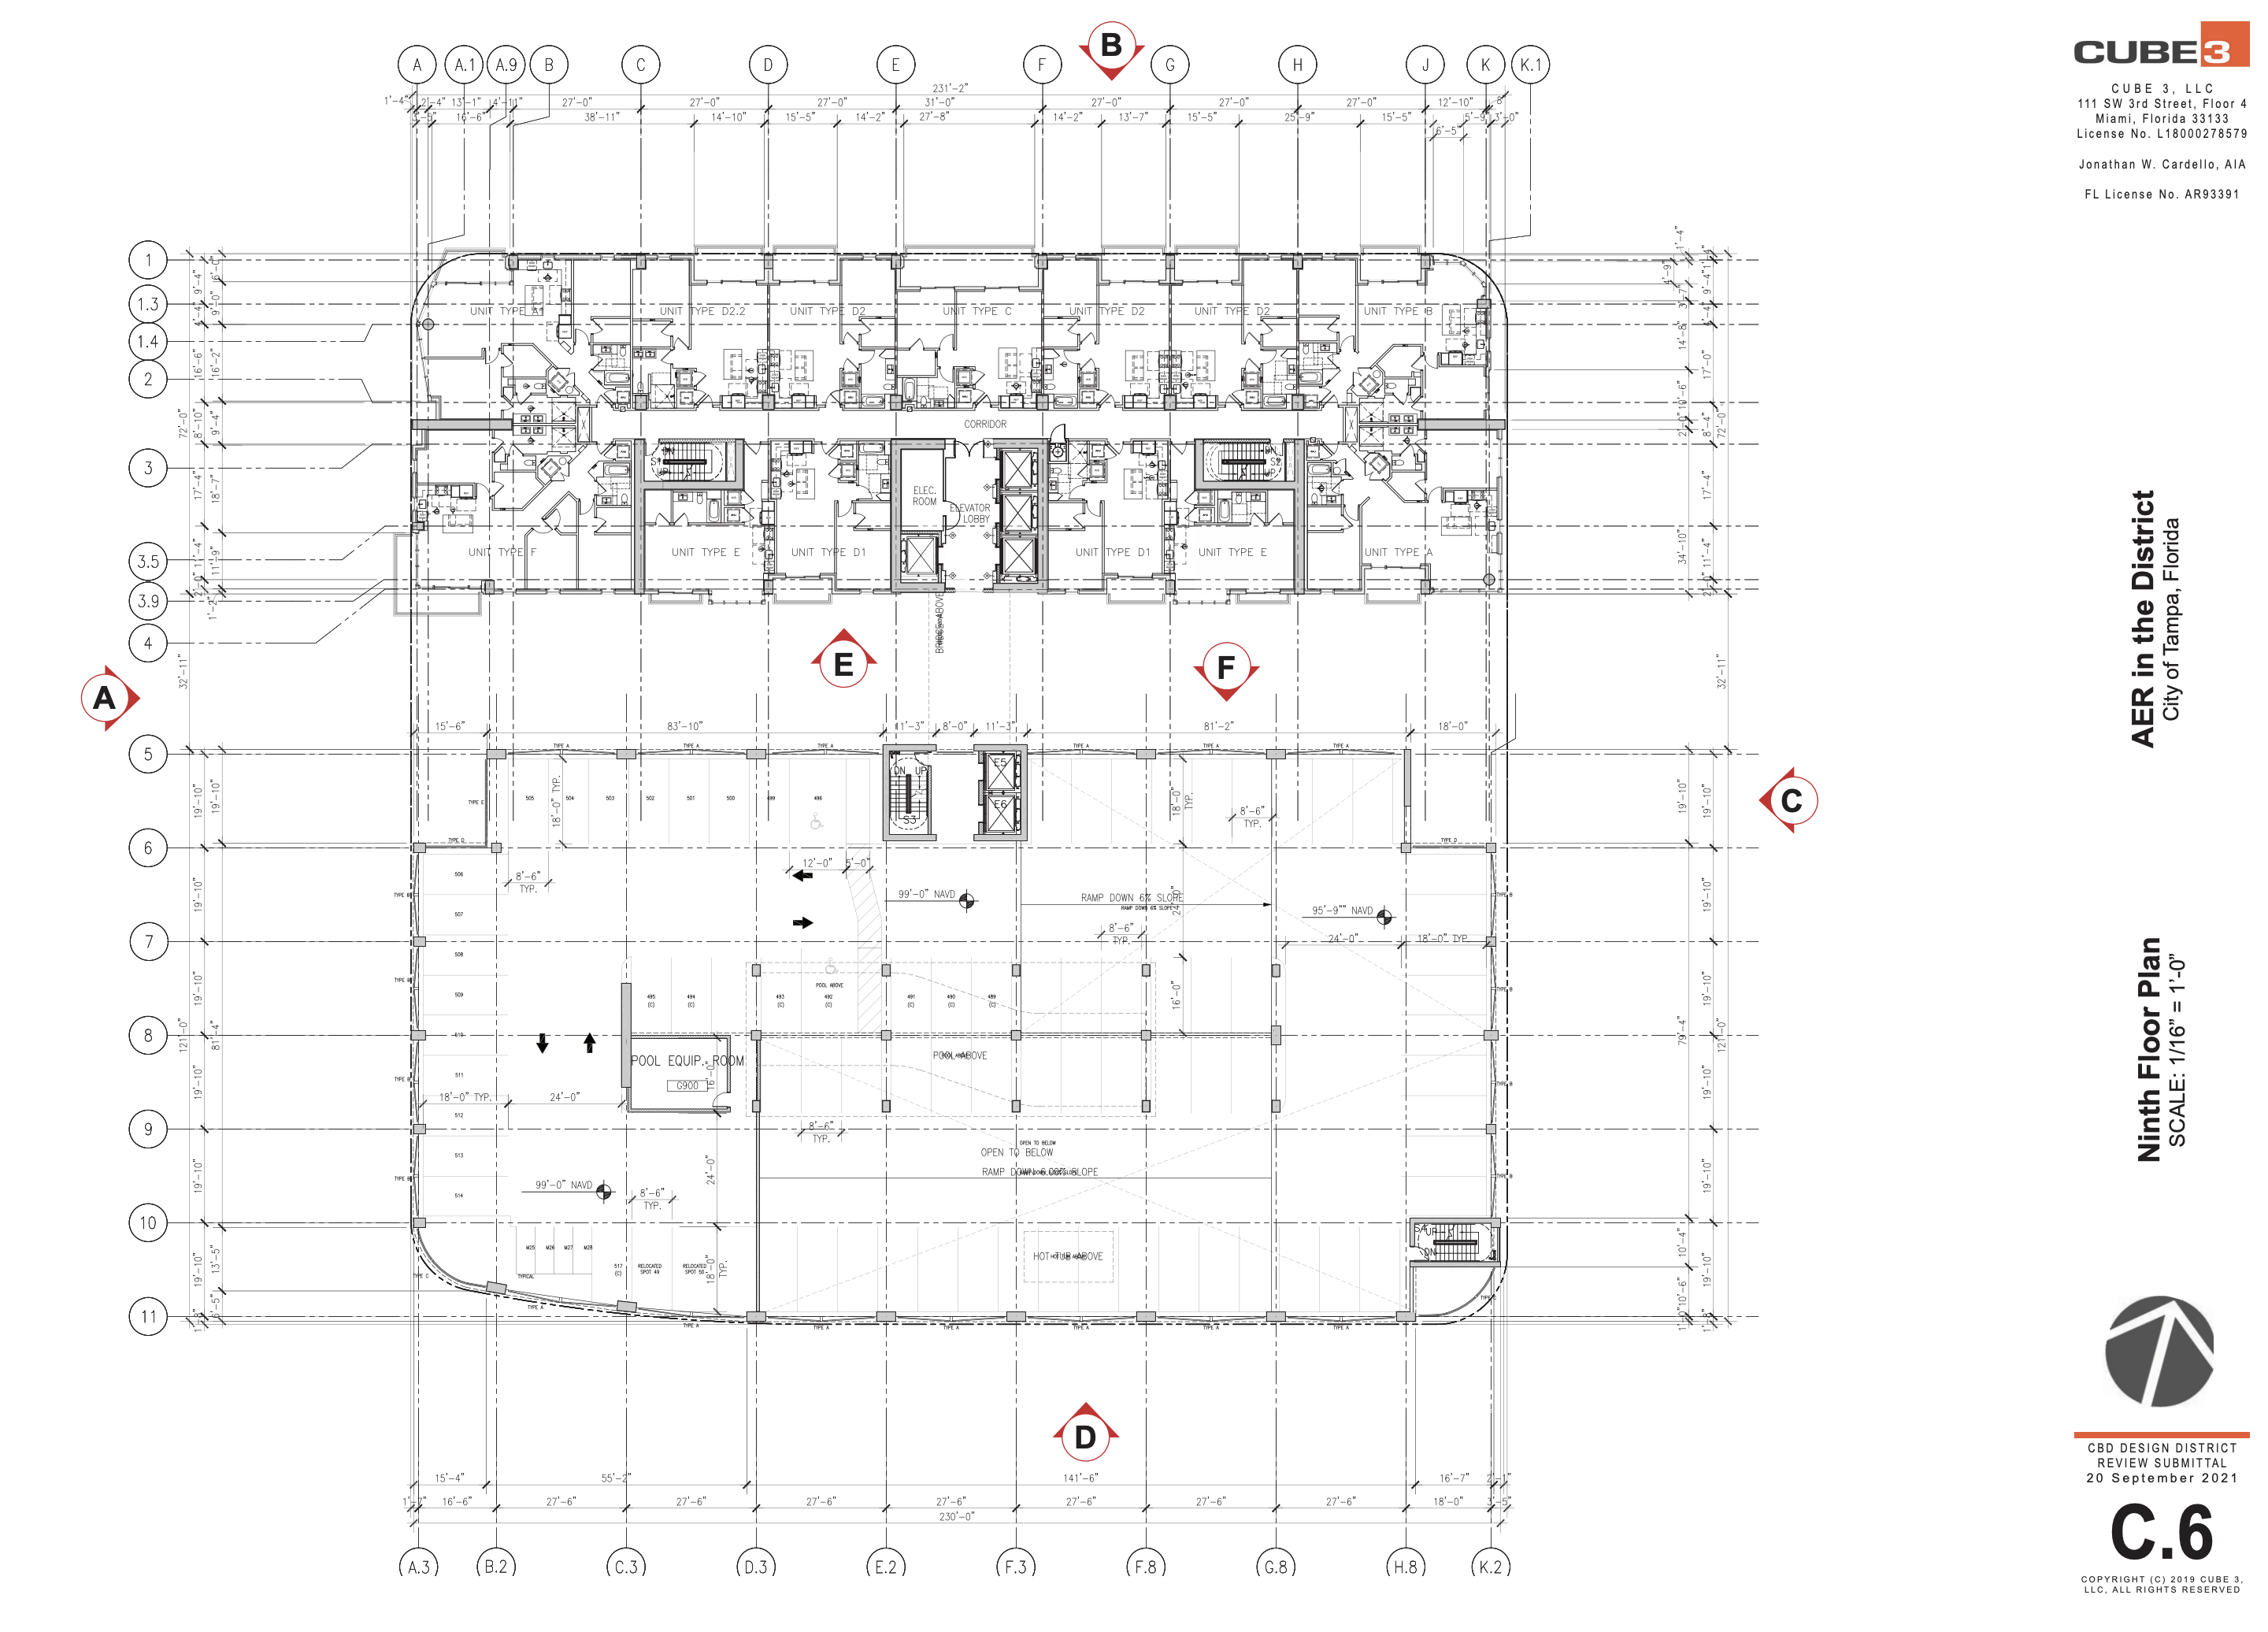 Ninth Floor Plan. Courtesy of Cube 3.